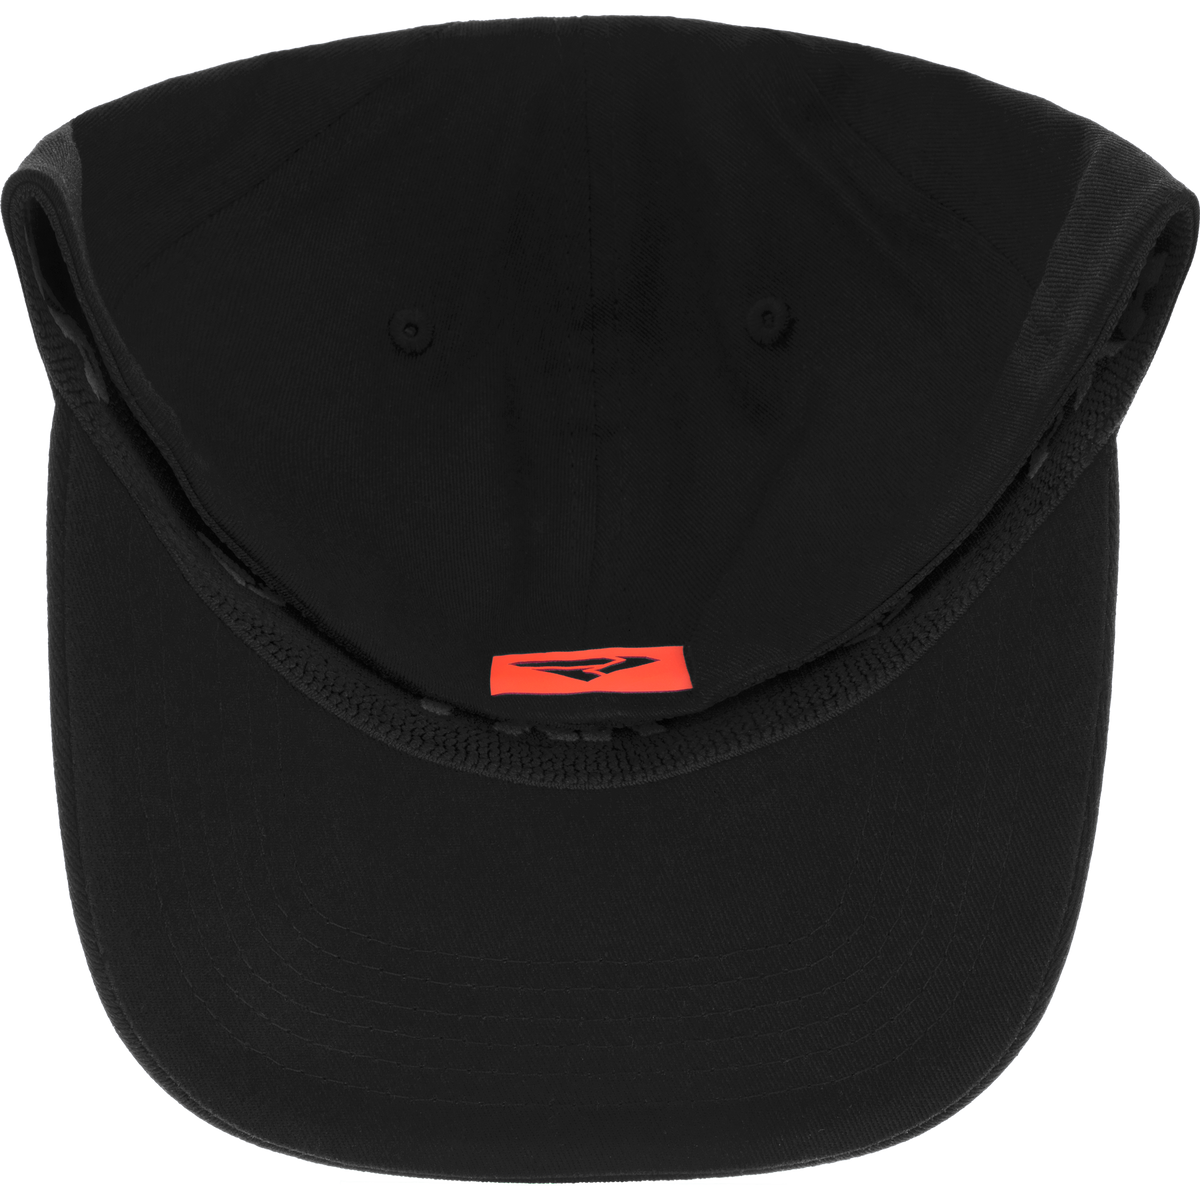 FXR Evo Hat - 2024